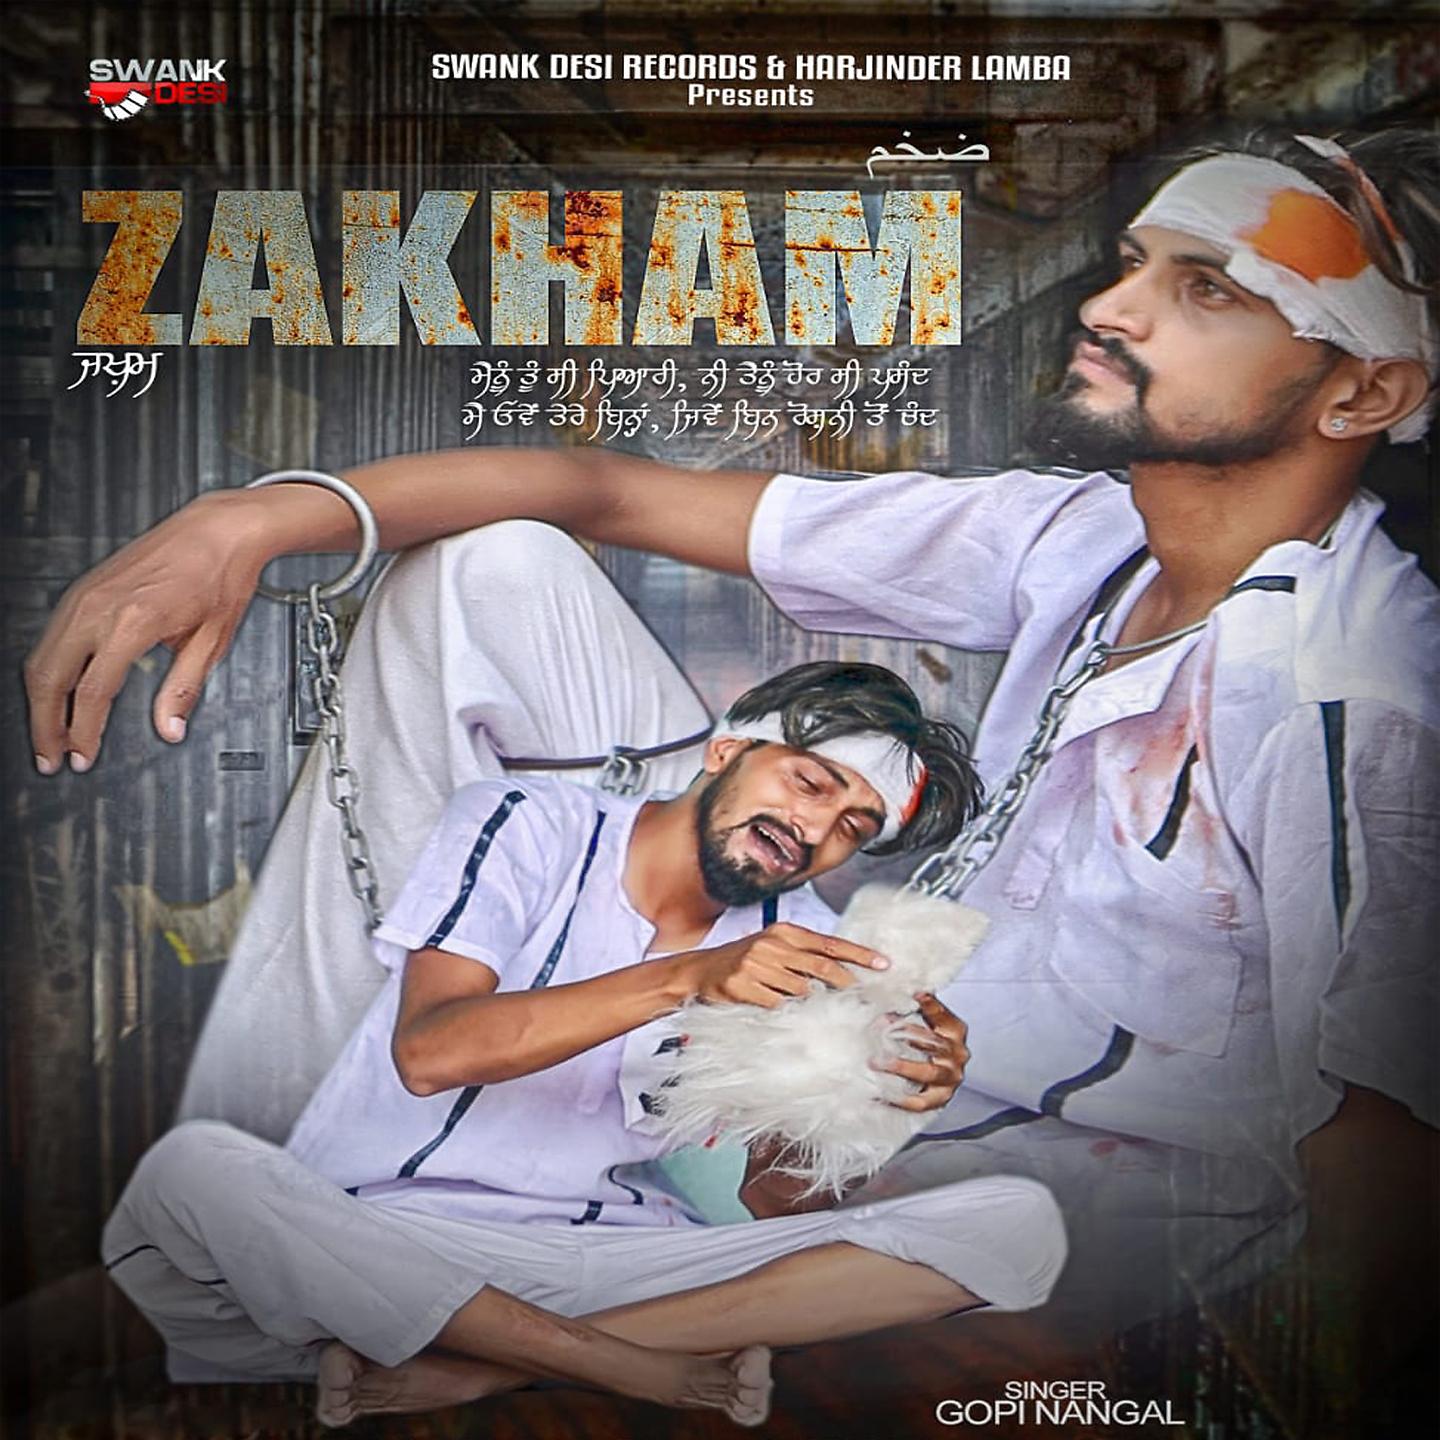 Постер альбома Zakham